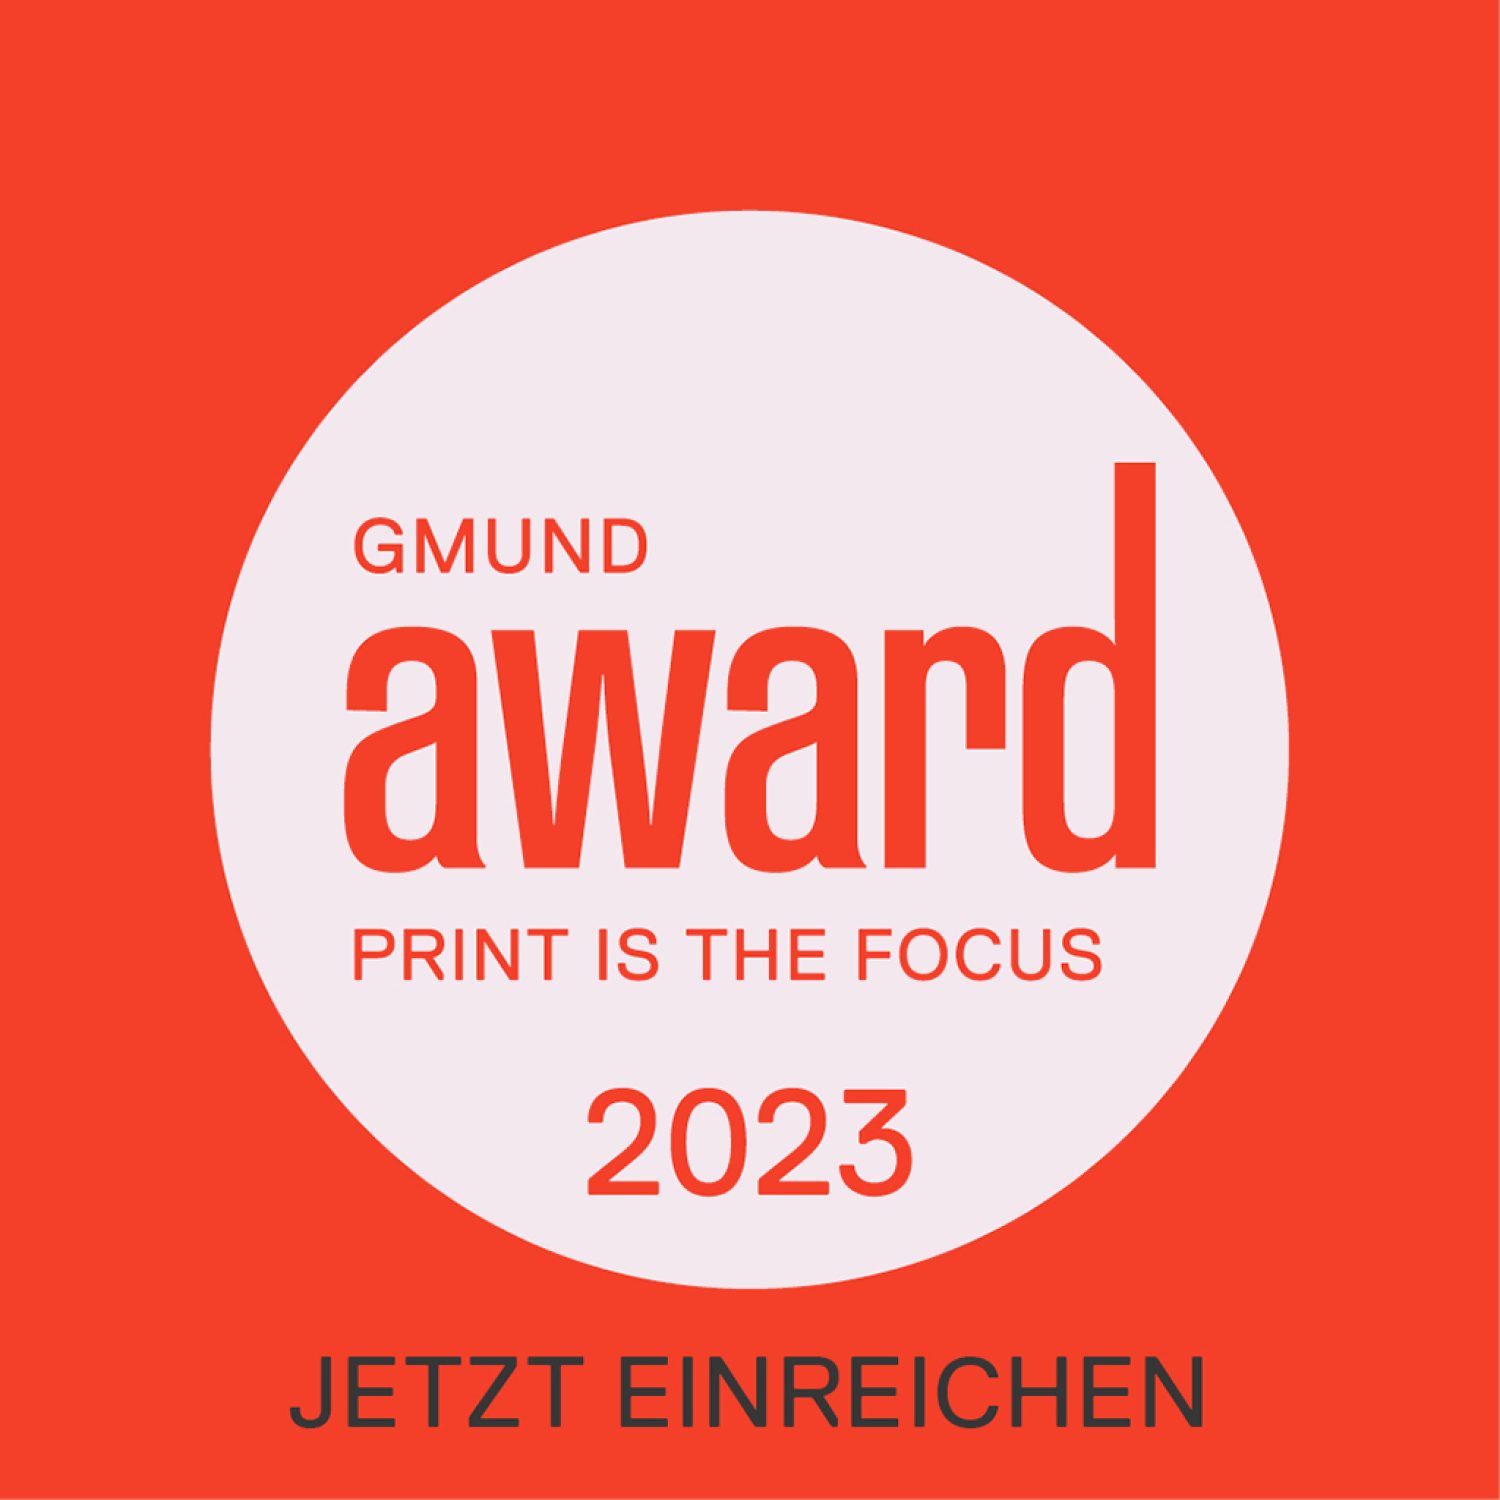 Gmund Award 2023